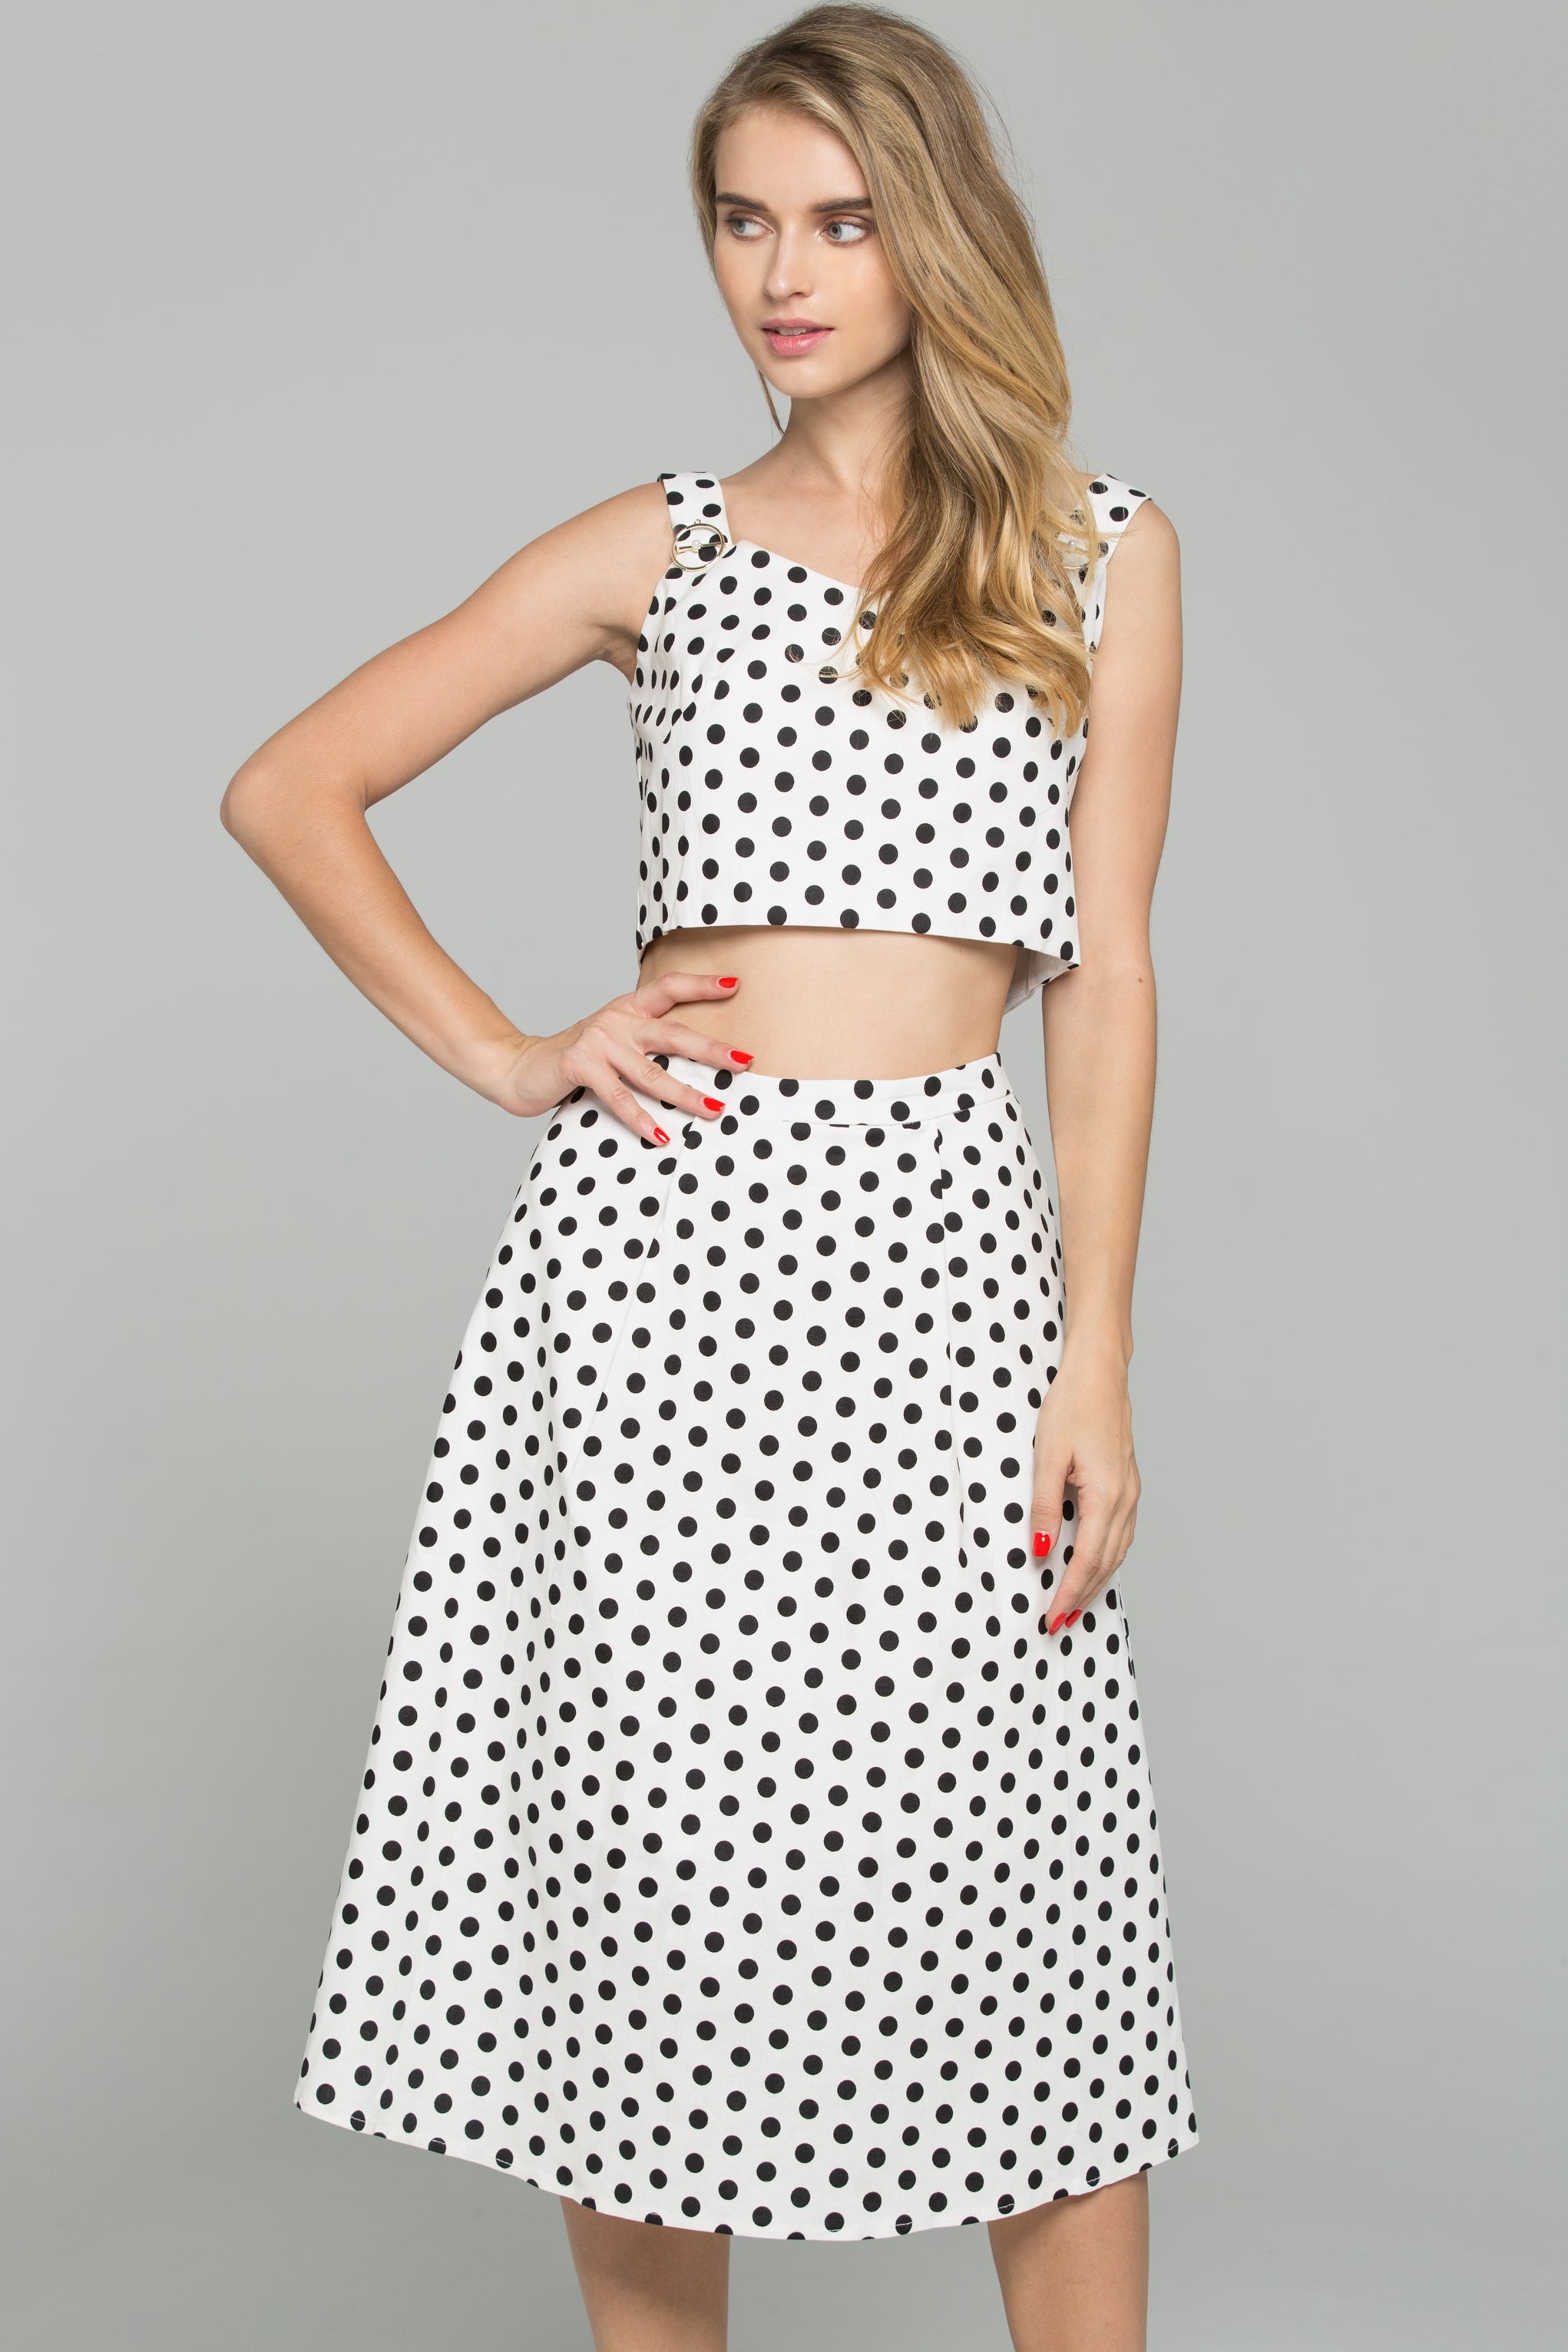 black with white polka dot dress